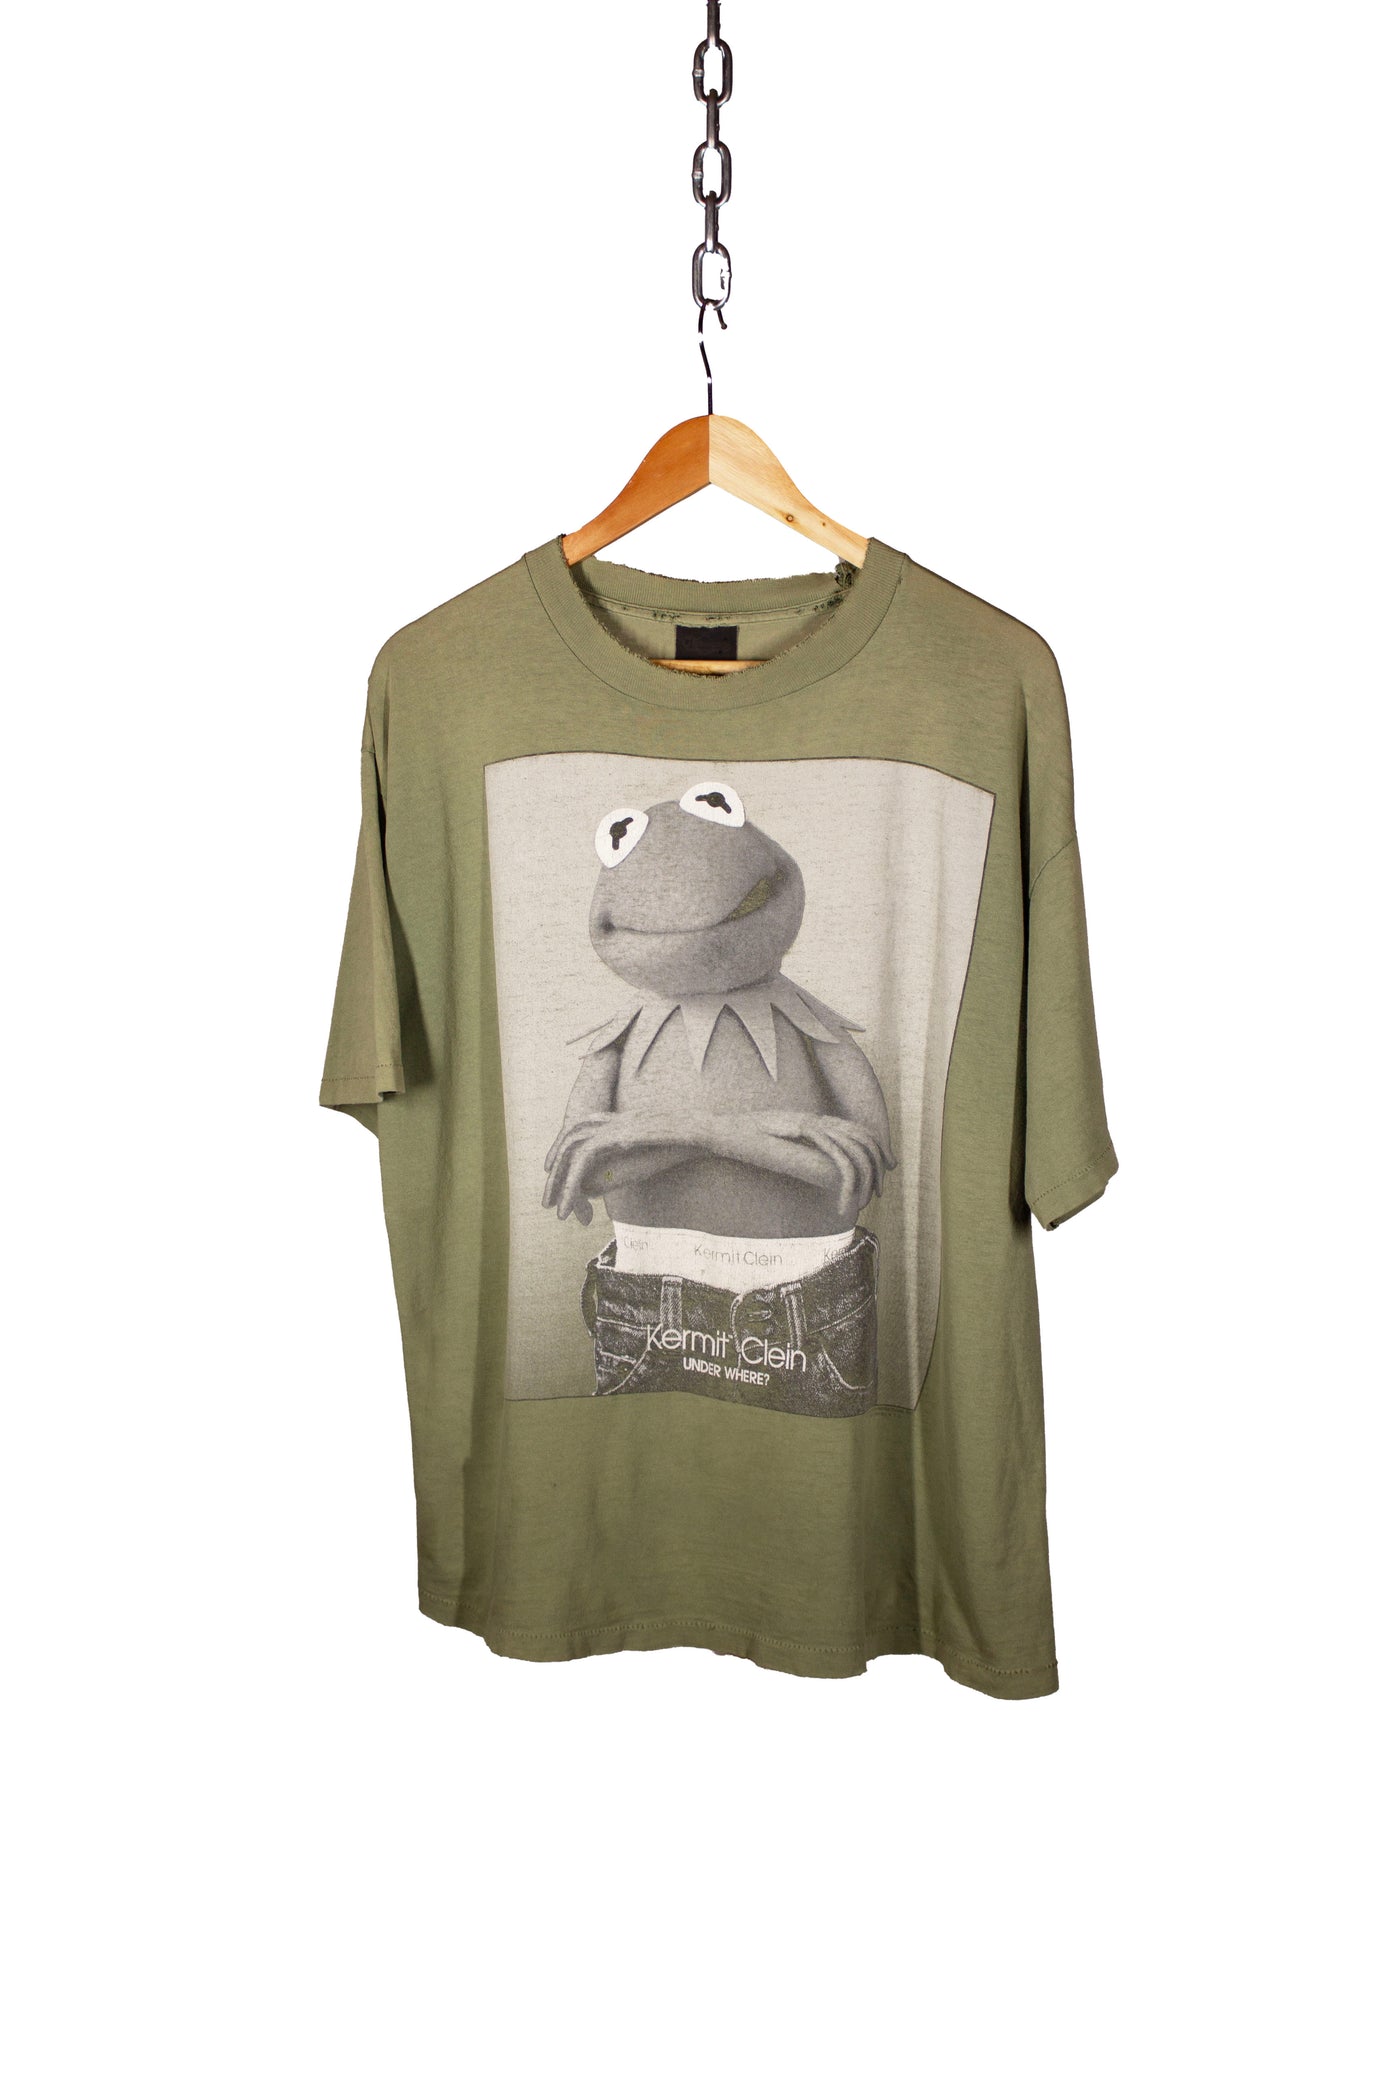 Vintage 90s Kermit Clein T-Shirt